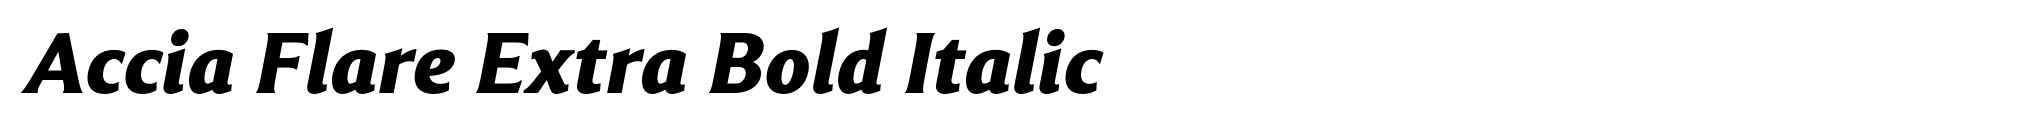 Accia Flare Extra Bold Italic image